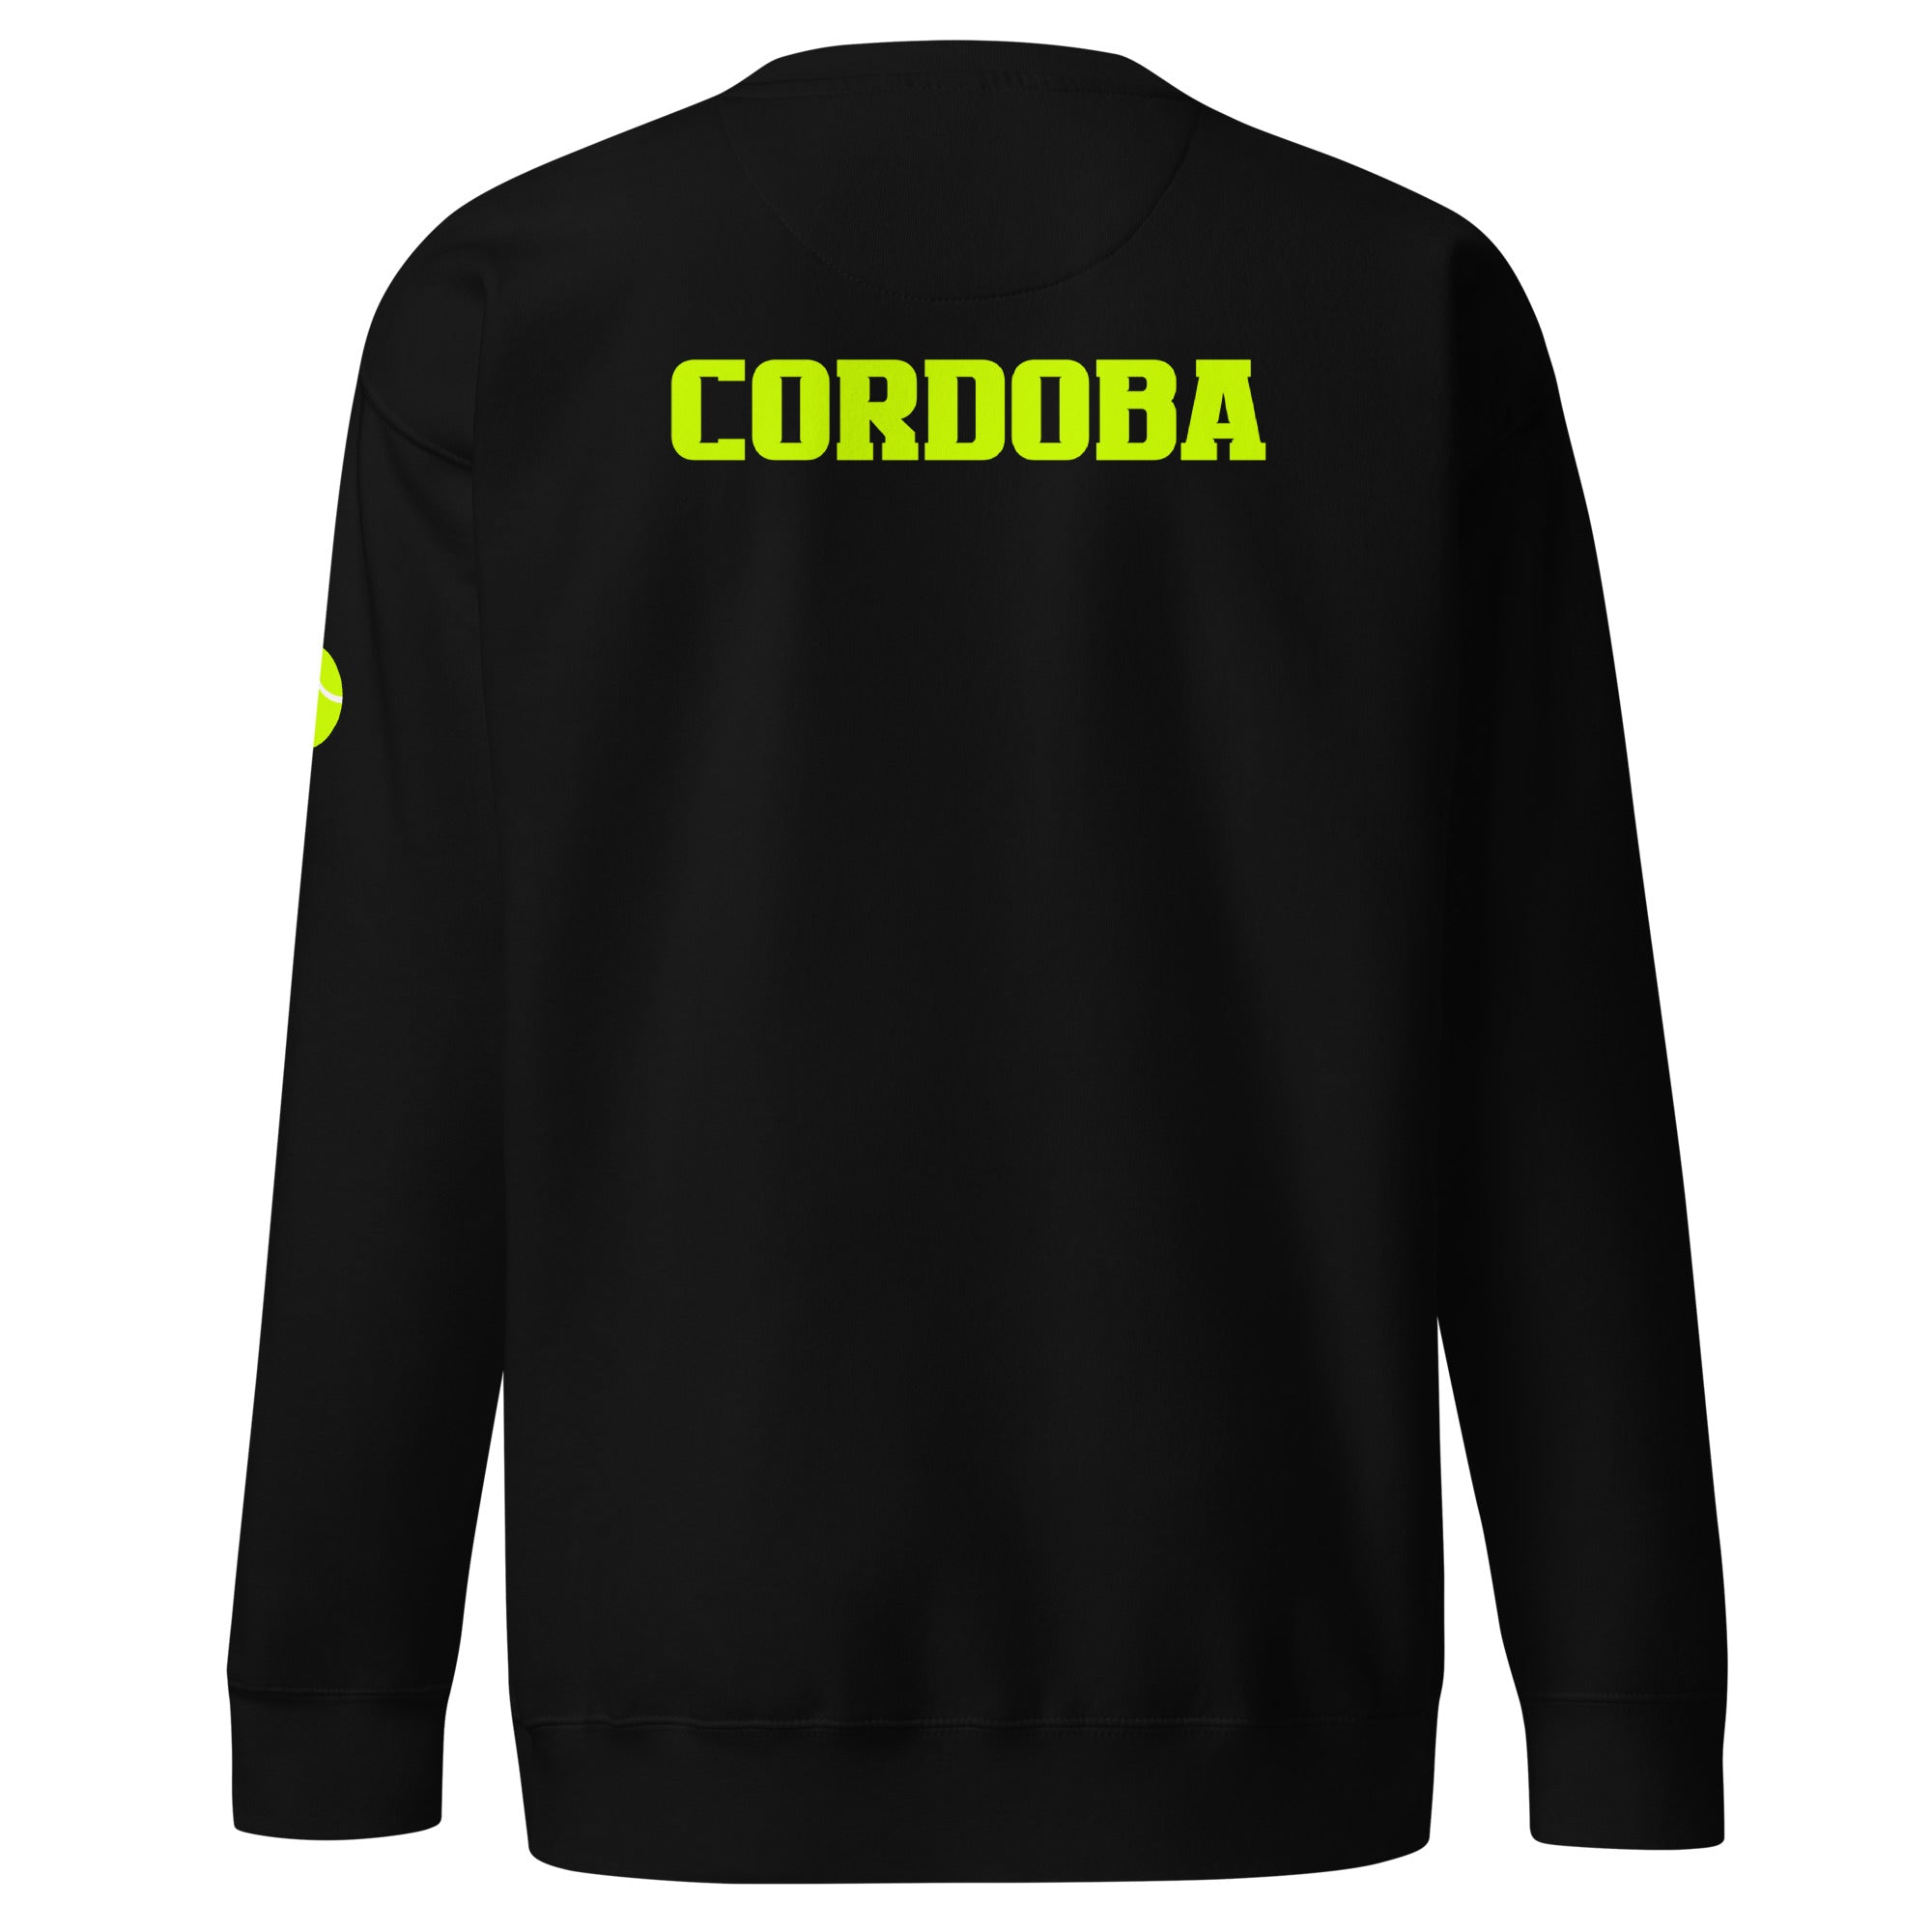 Unisex Premium Sweatshirt - Tennis Masters Cordoba - GRAPHIC T-SHIRTS